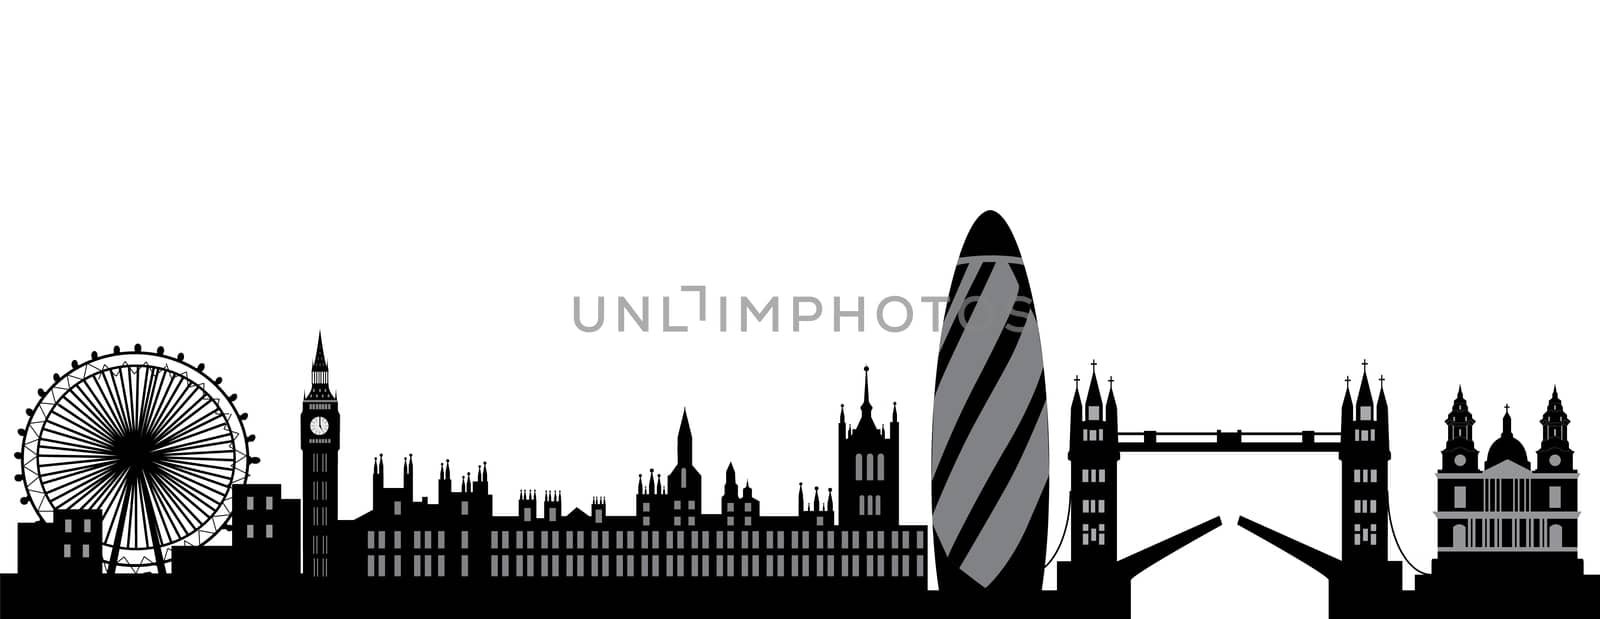 London skyline by compuinfoto